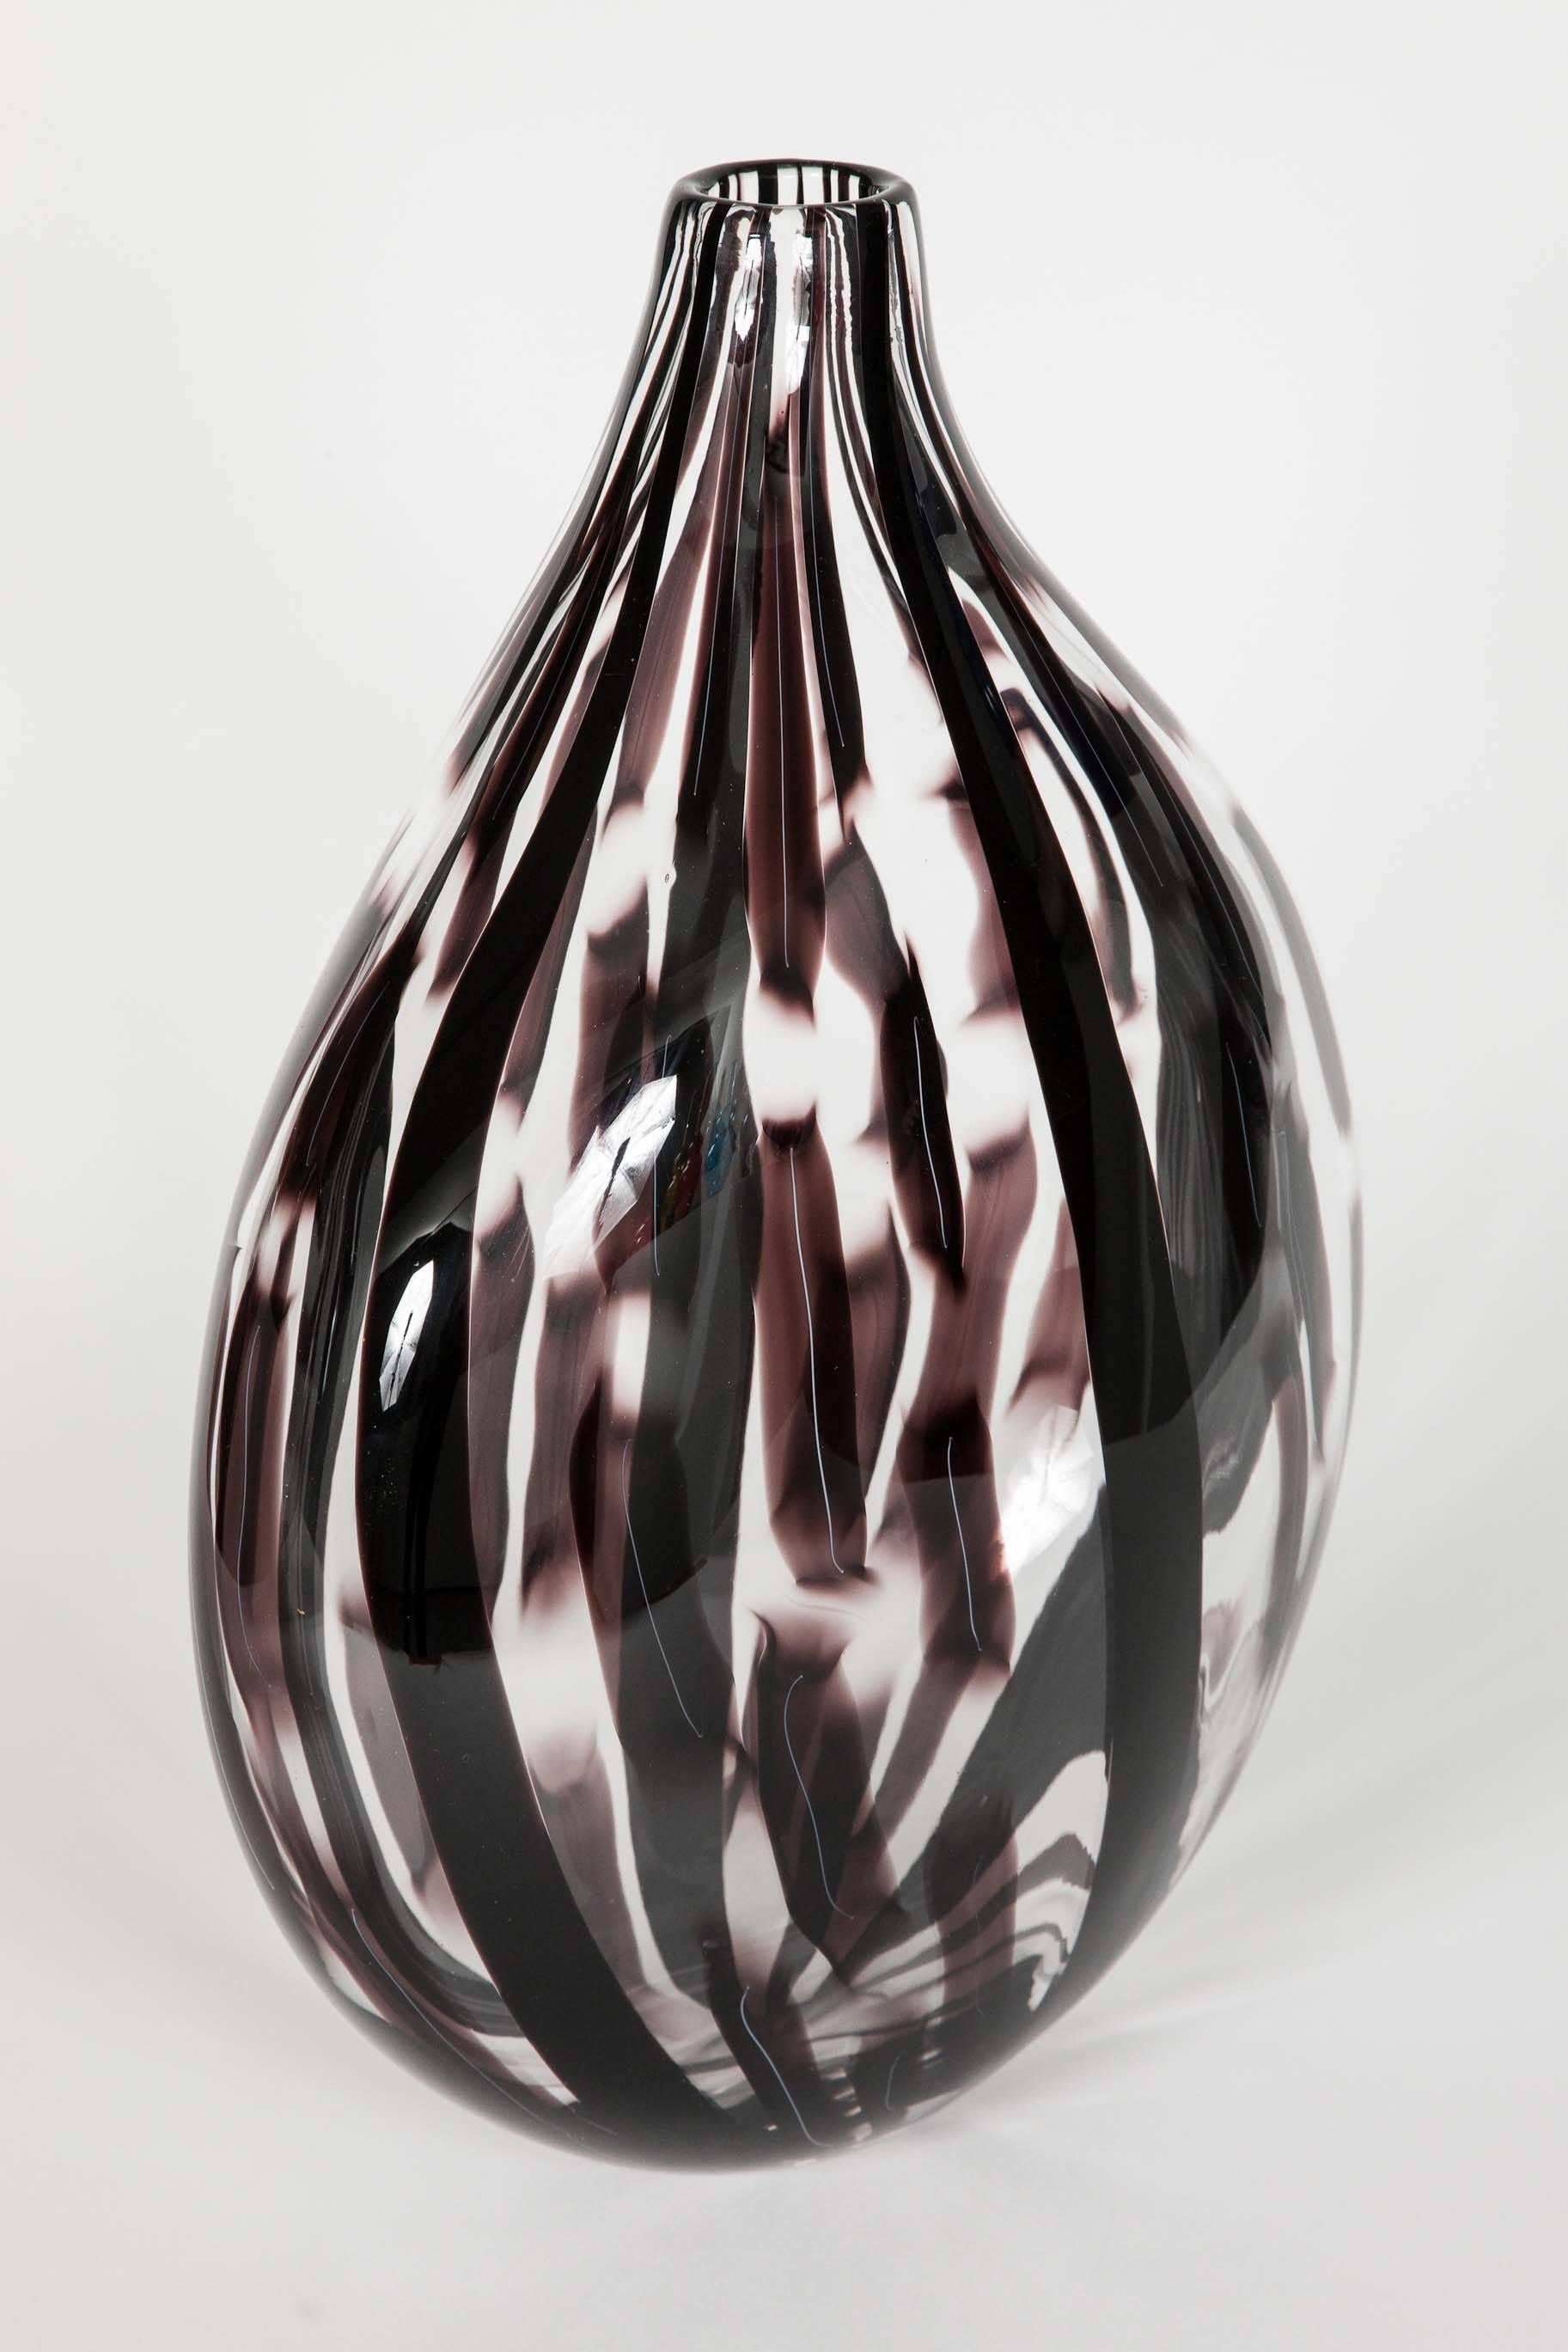 Hand-Crafted Ikate II, a clear & aubergine / black Glass blown Sculpture by Ann Wåhlström